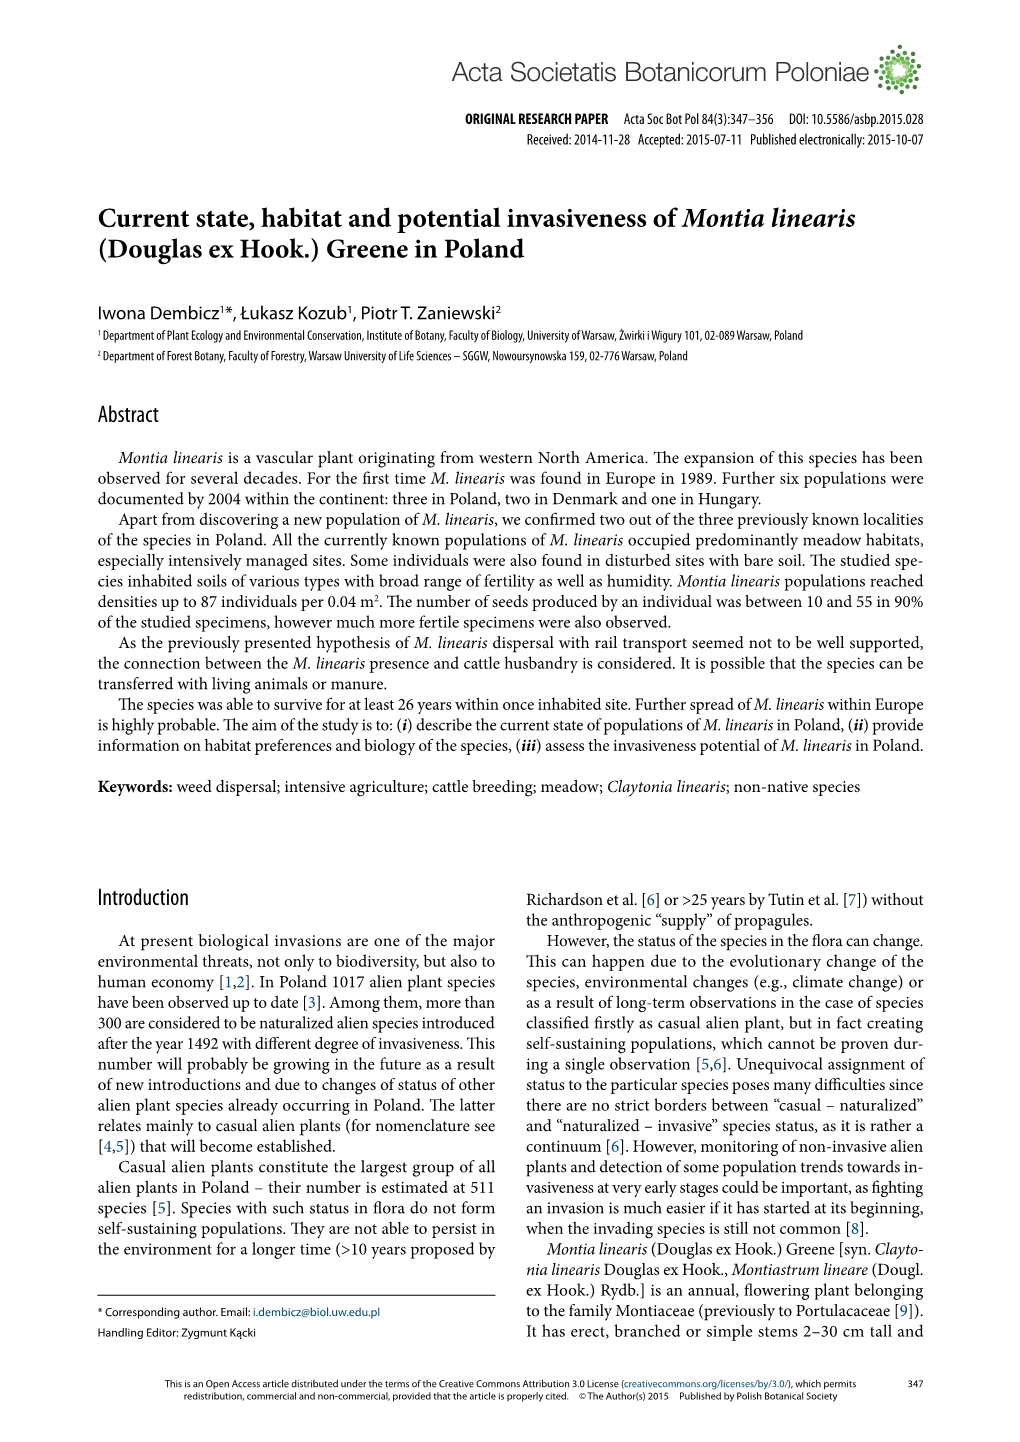 Current State, Habitat and Potential Invasiveness of Montia Linearis (Douglas Ex Hook.) Greene in Poland